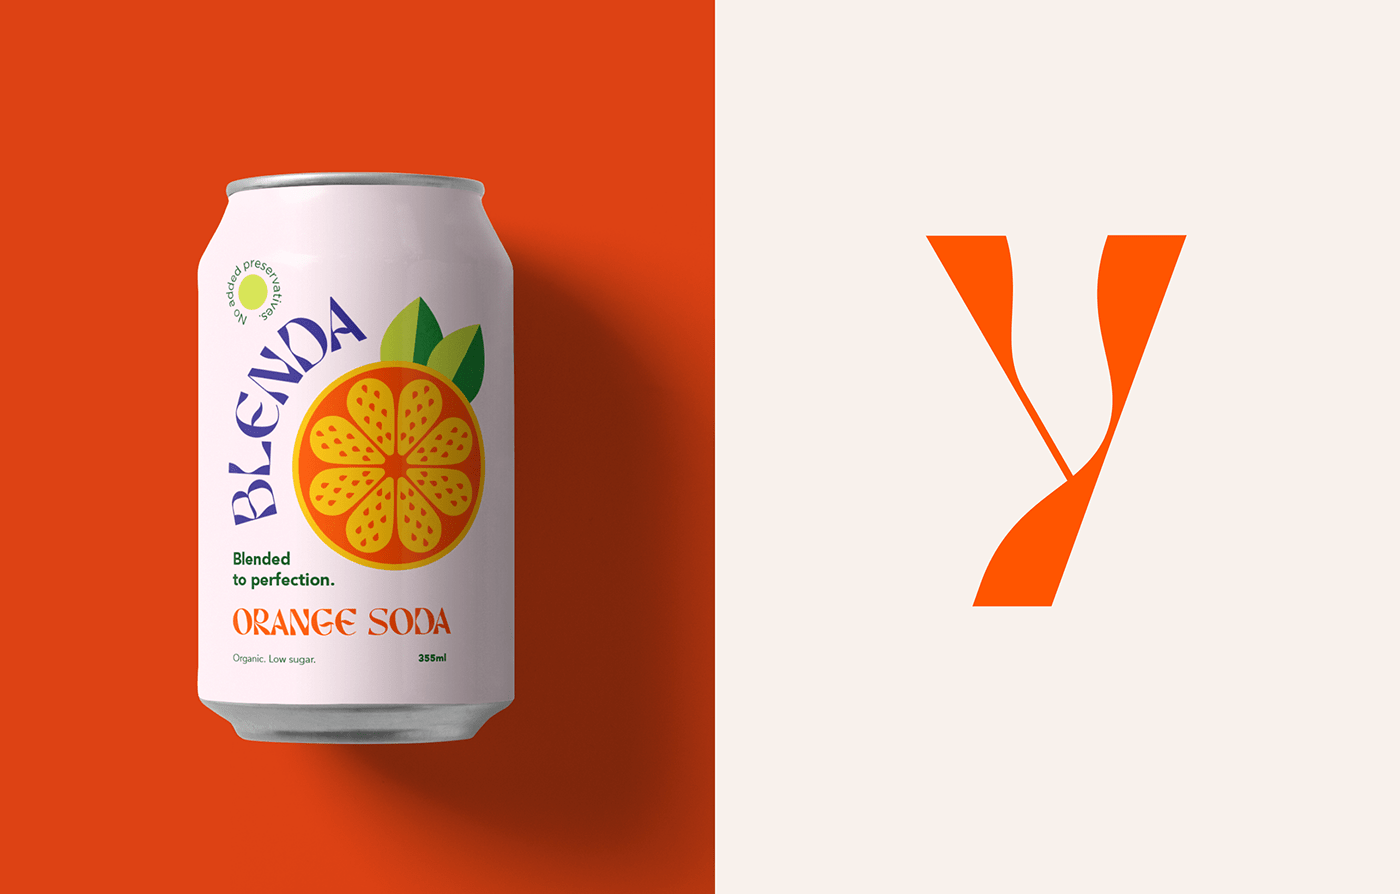 Blenda soda can conceptual packaging design and branding. Orange soda packaging design.